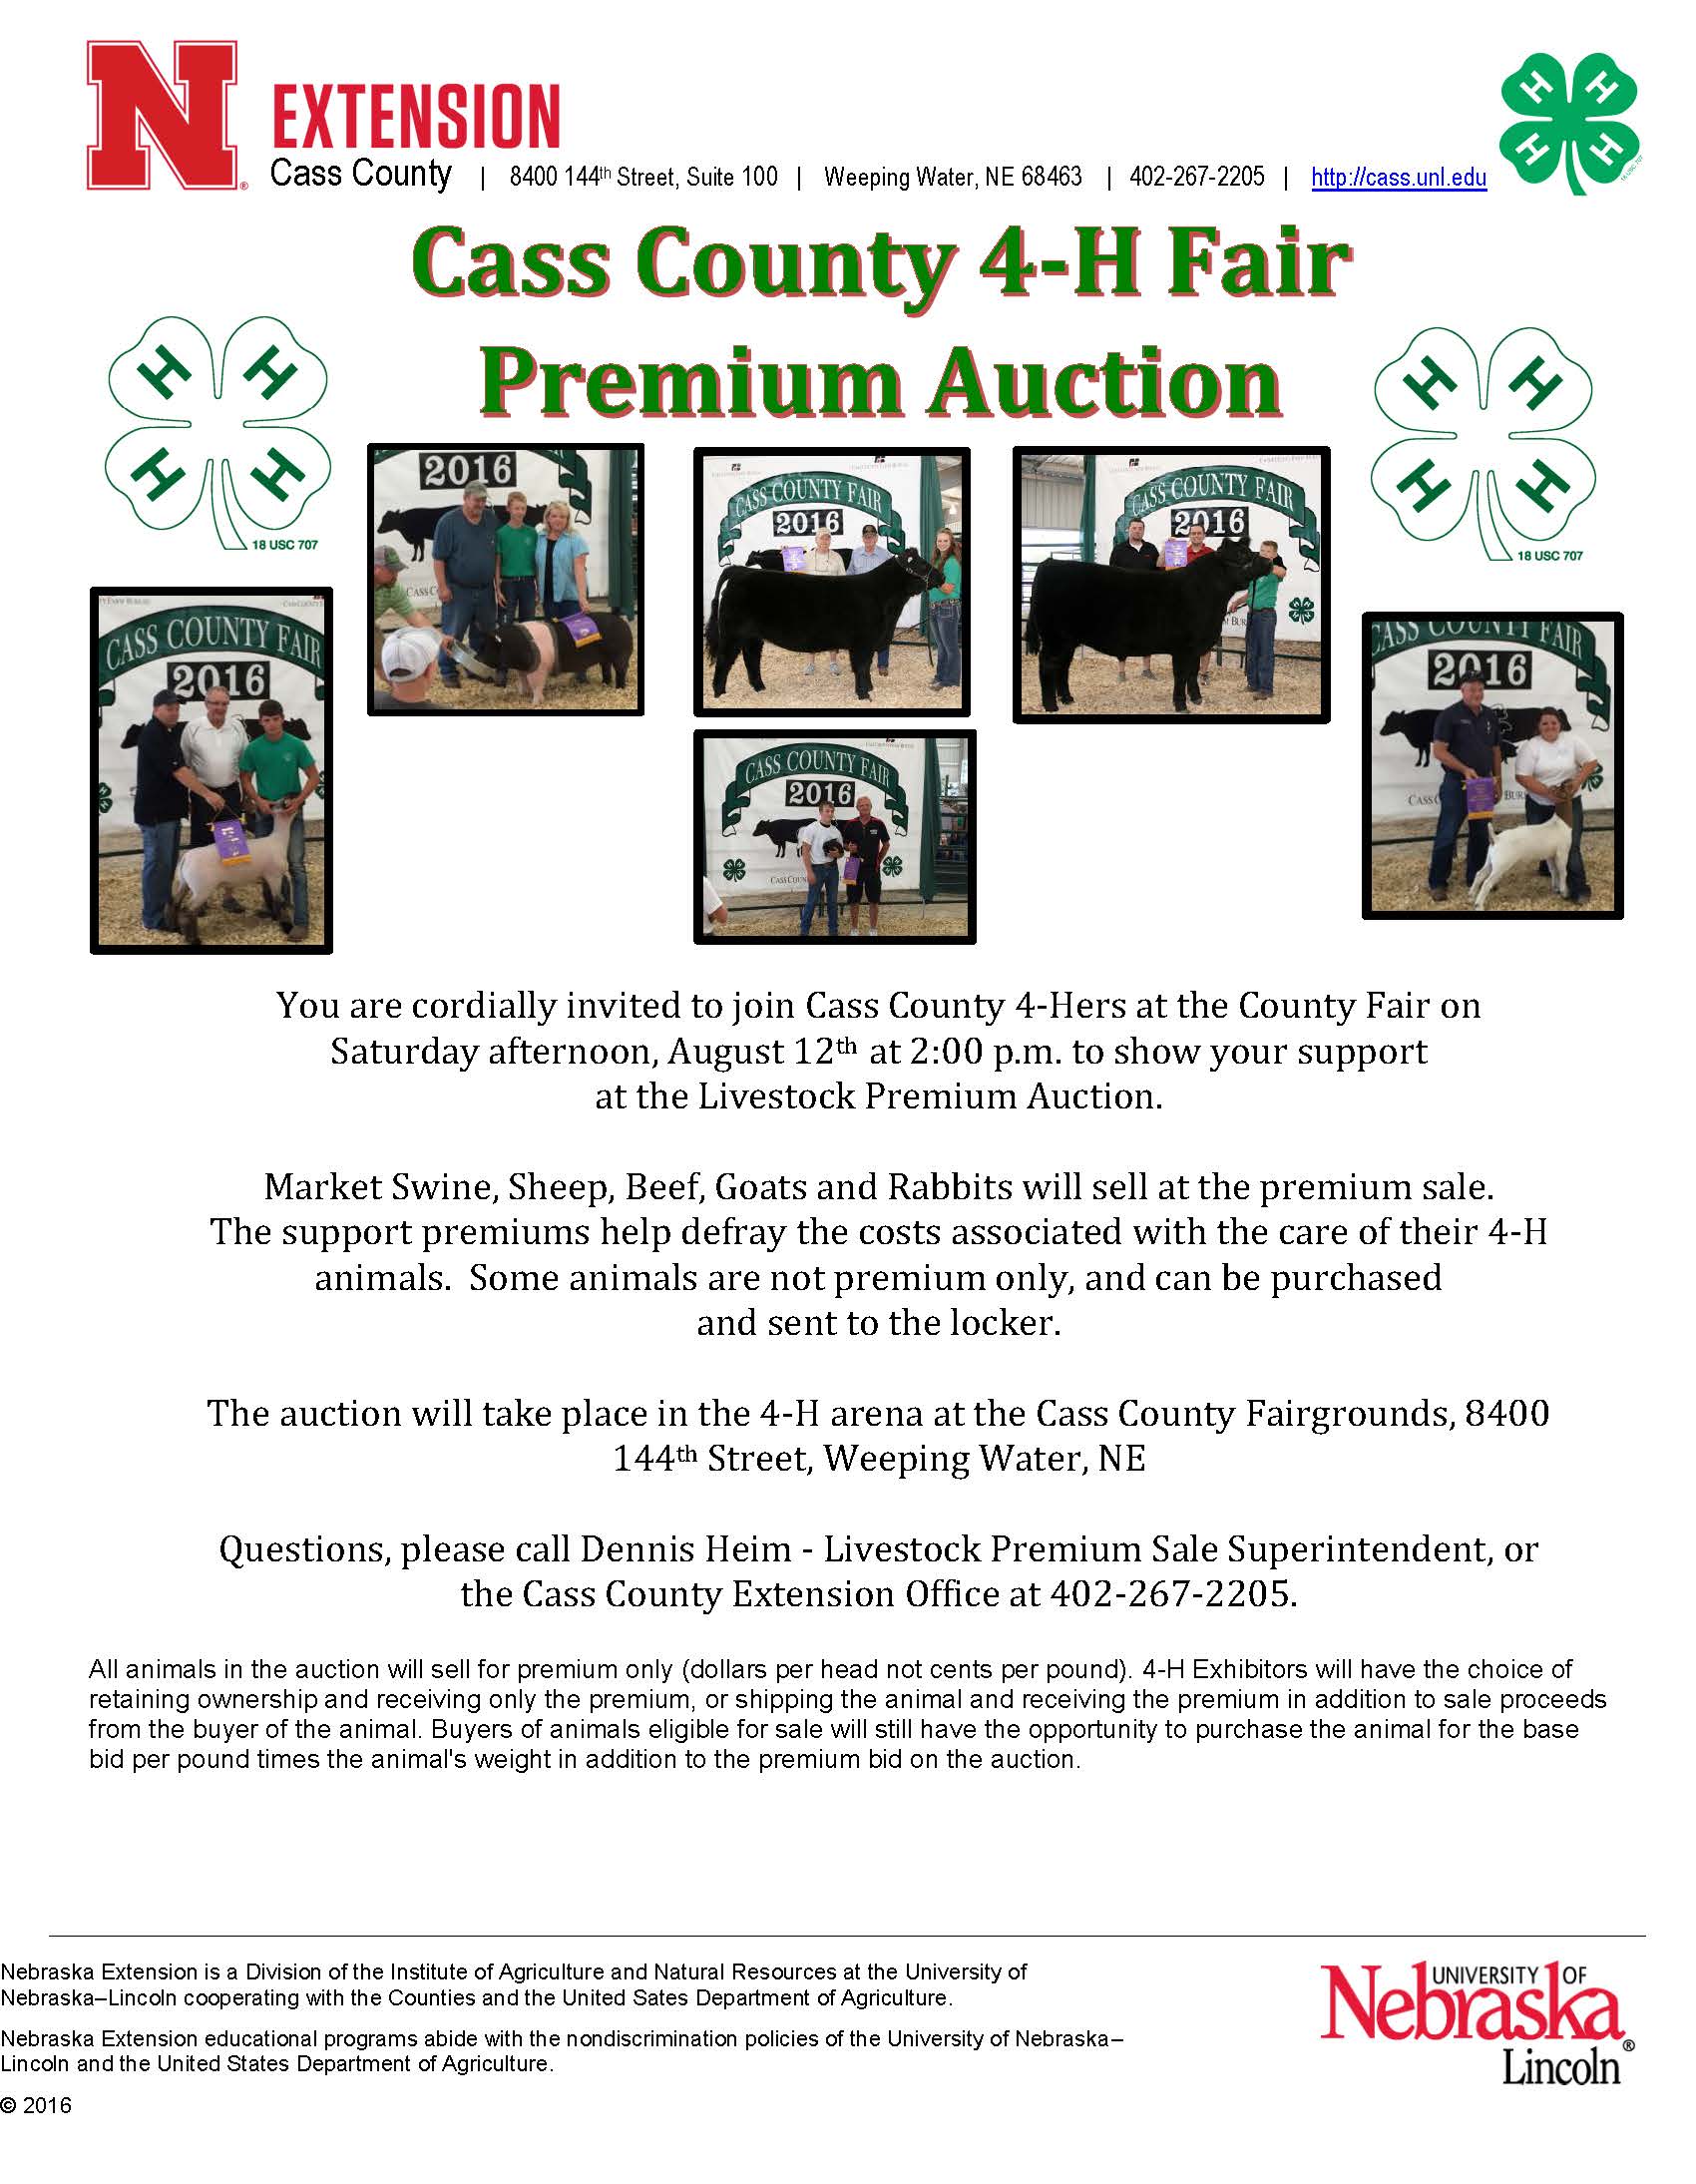 Livestock Auction flyer for 2017